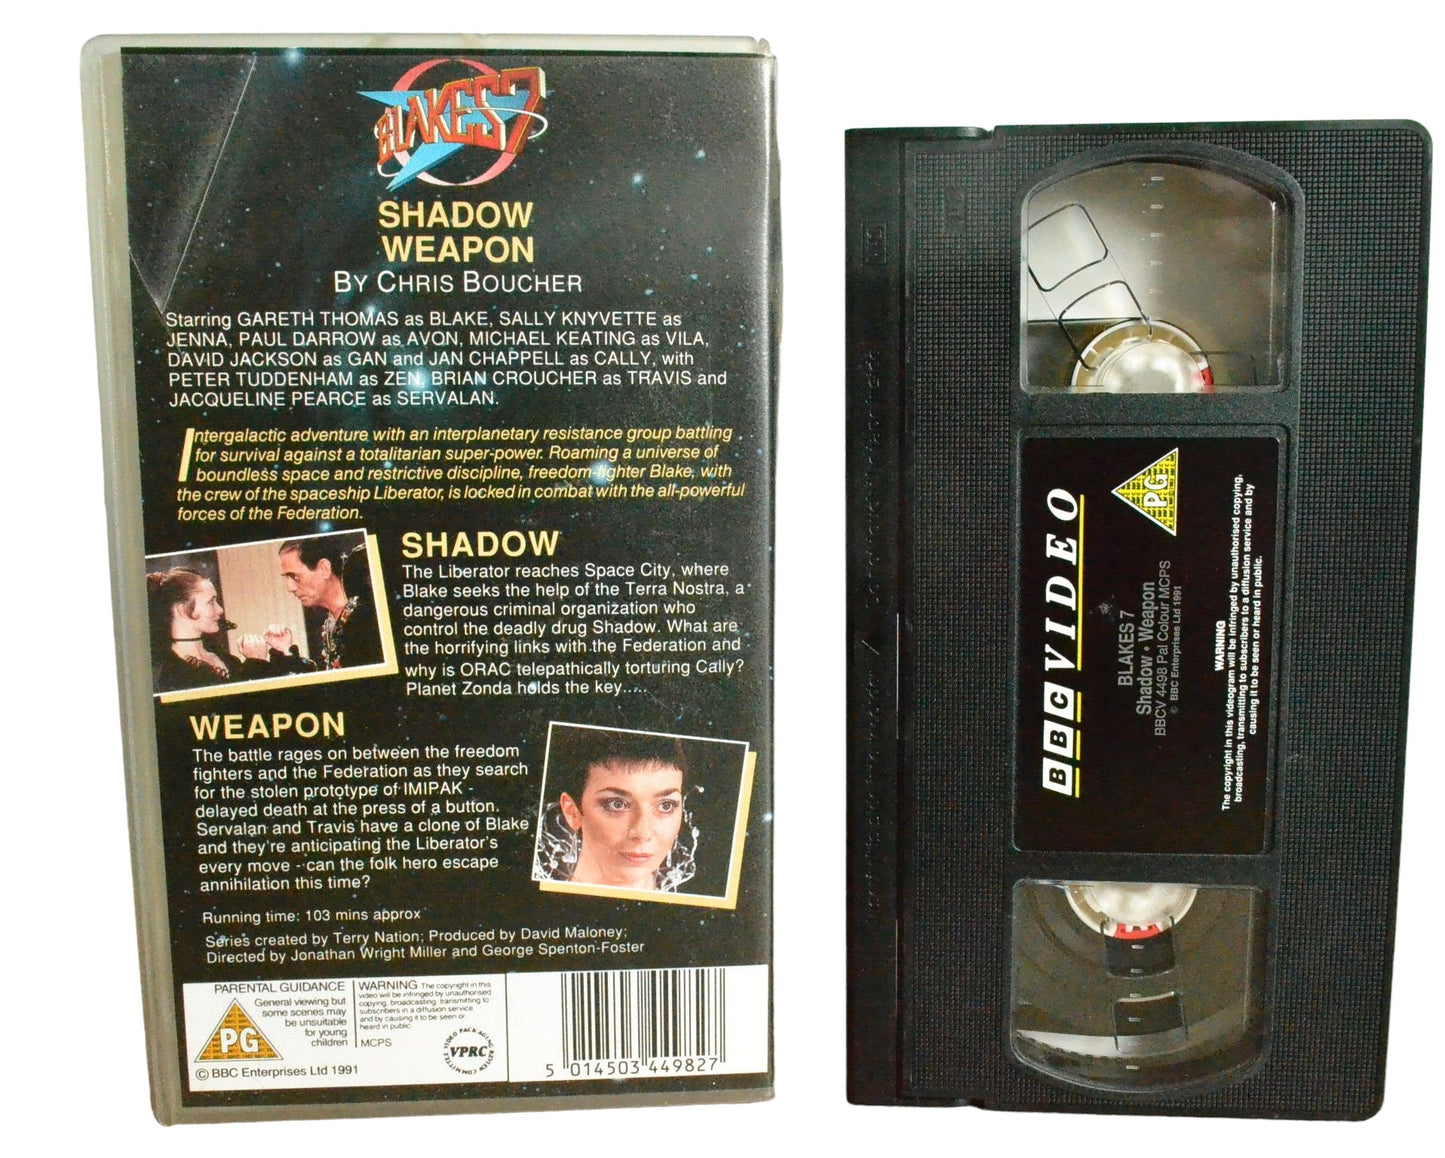 Blake's 7 : Shadow / Weapon - Gareth Thomas - BBC Video - BBCV4498 - Sci-Fi - Pal - VHS-